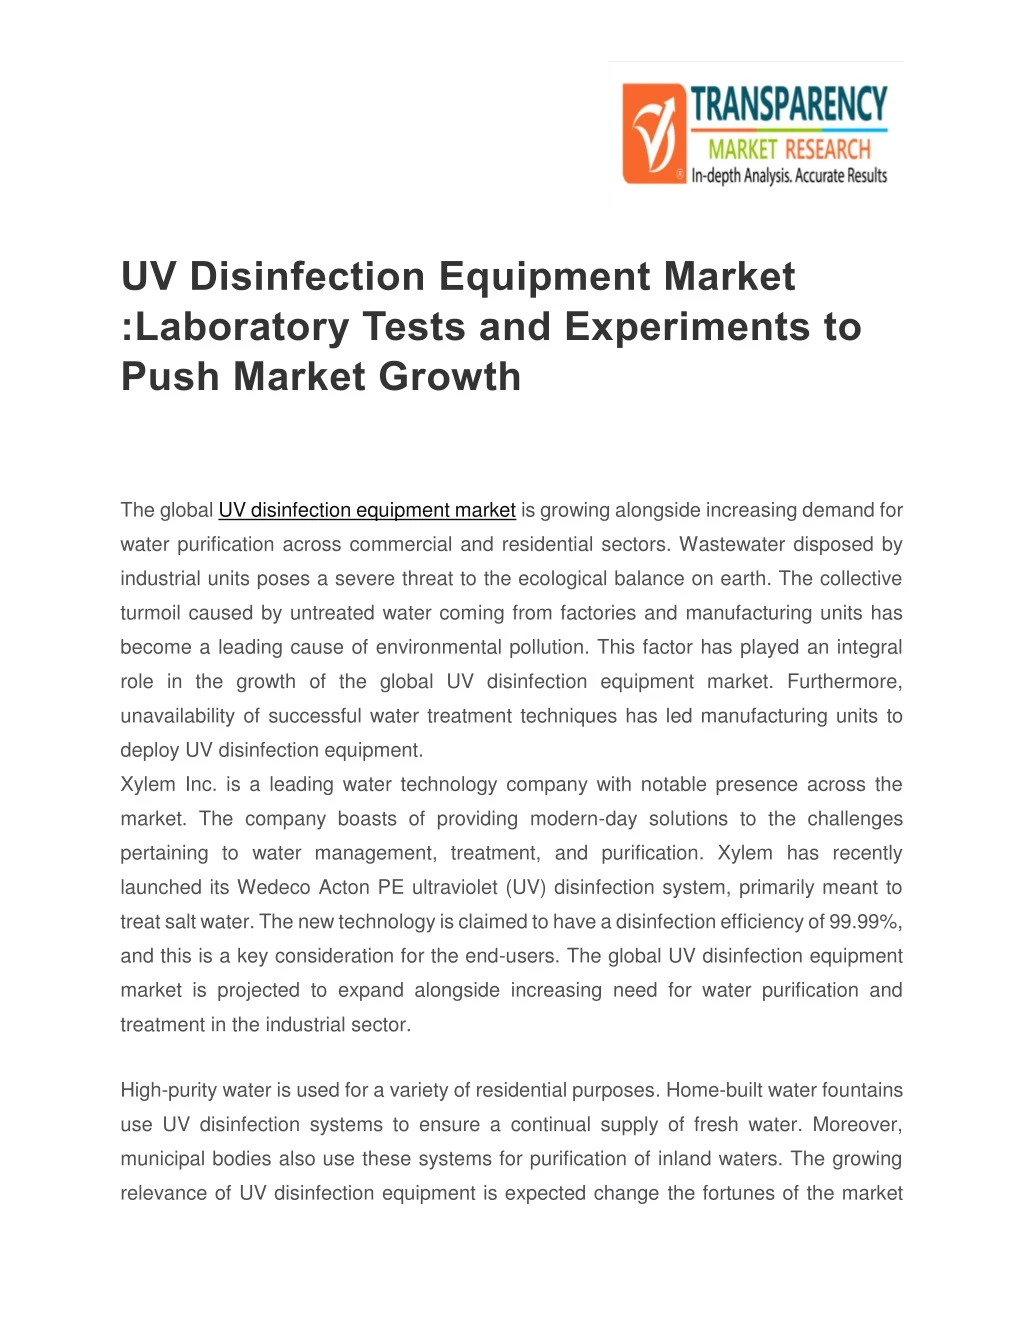 uv disinfection equipment market laboratory tests